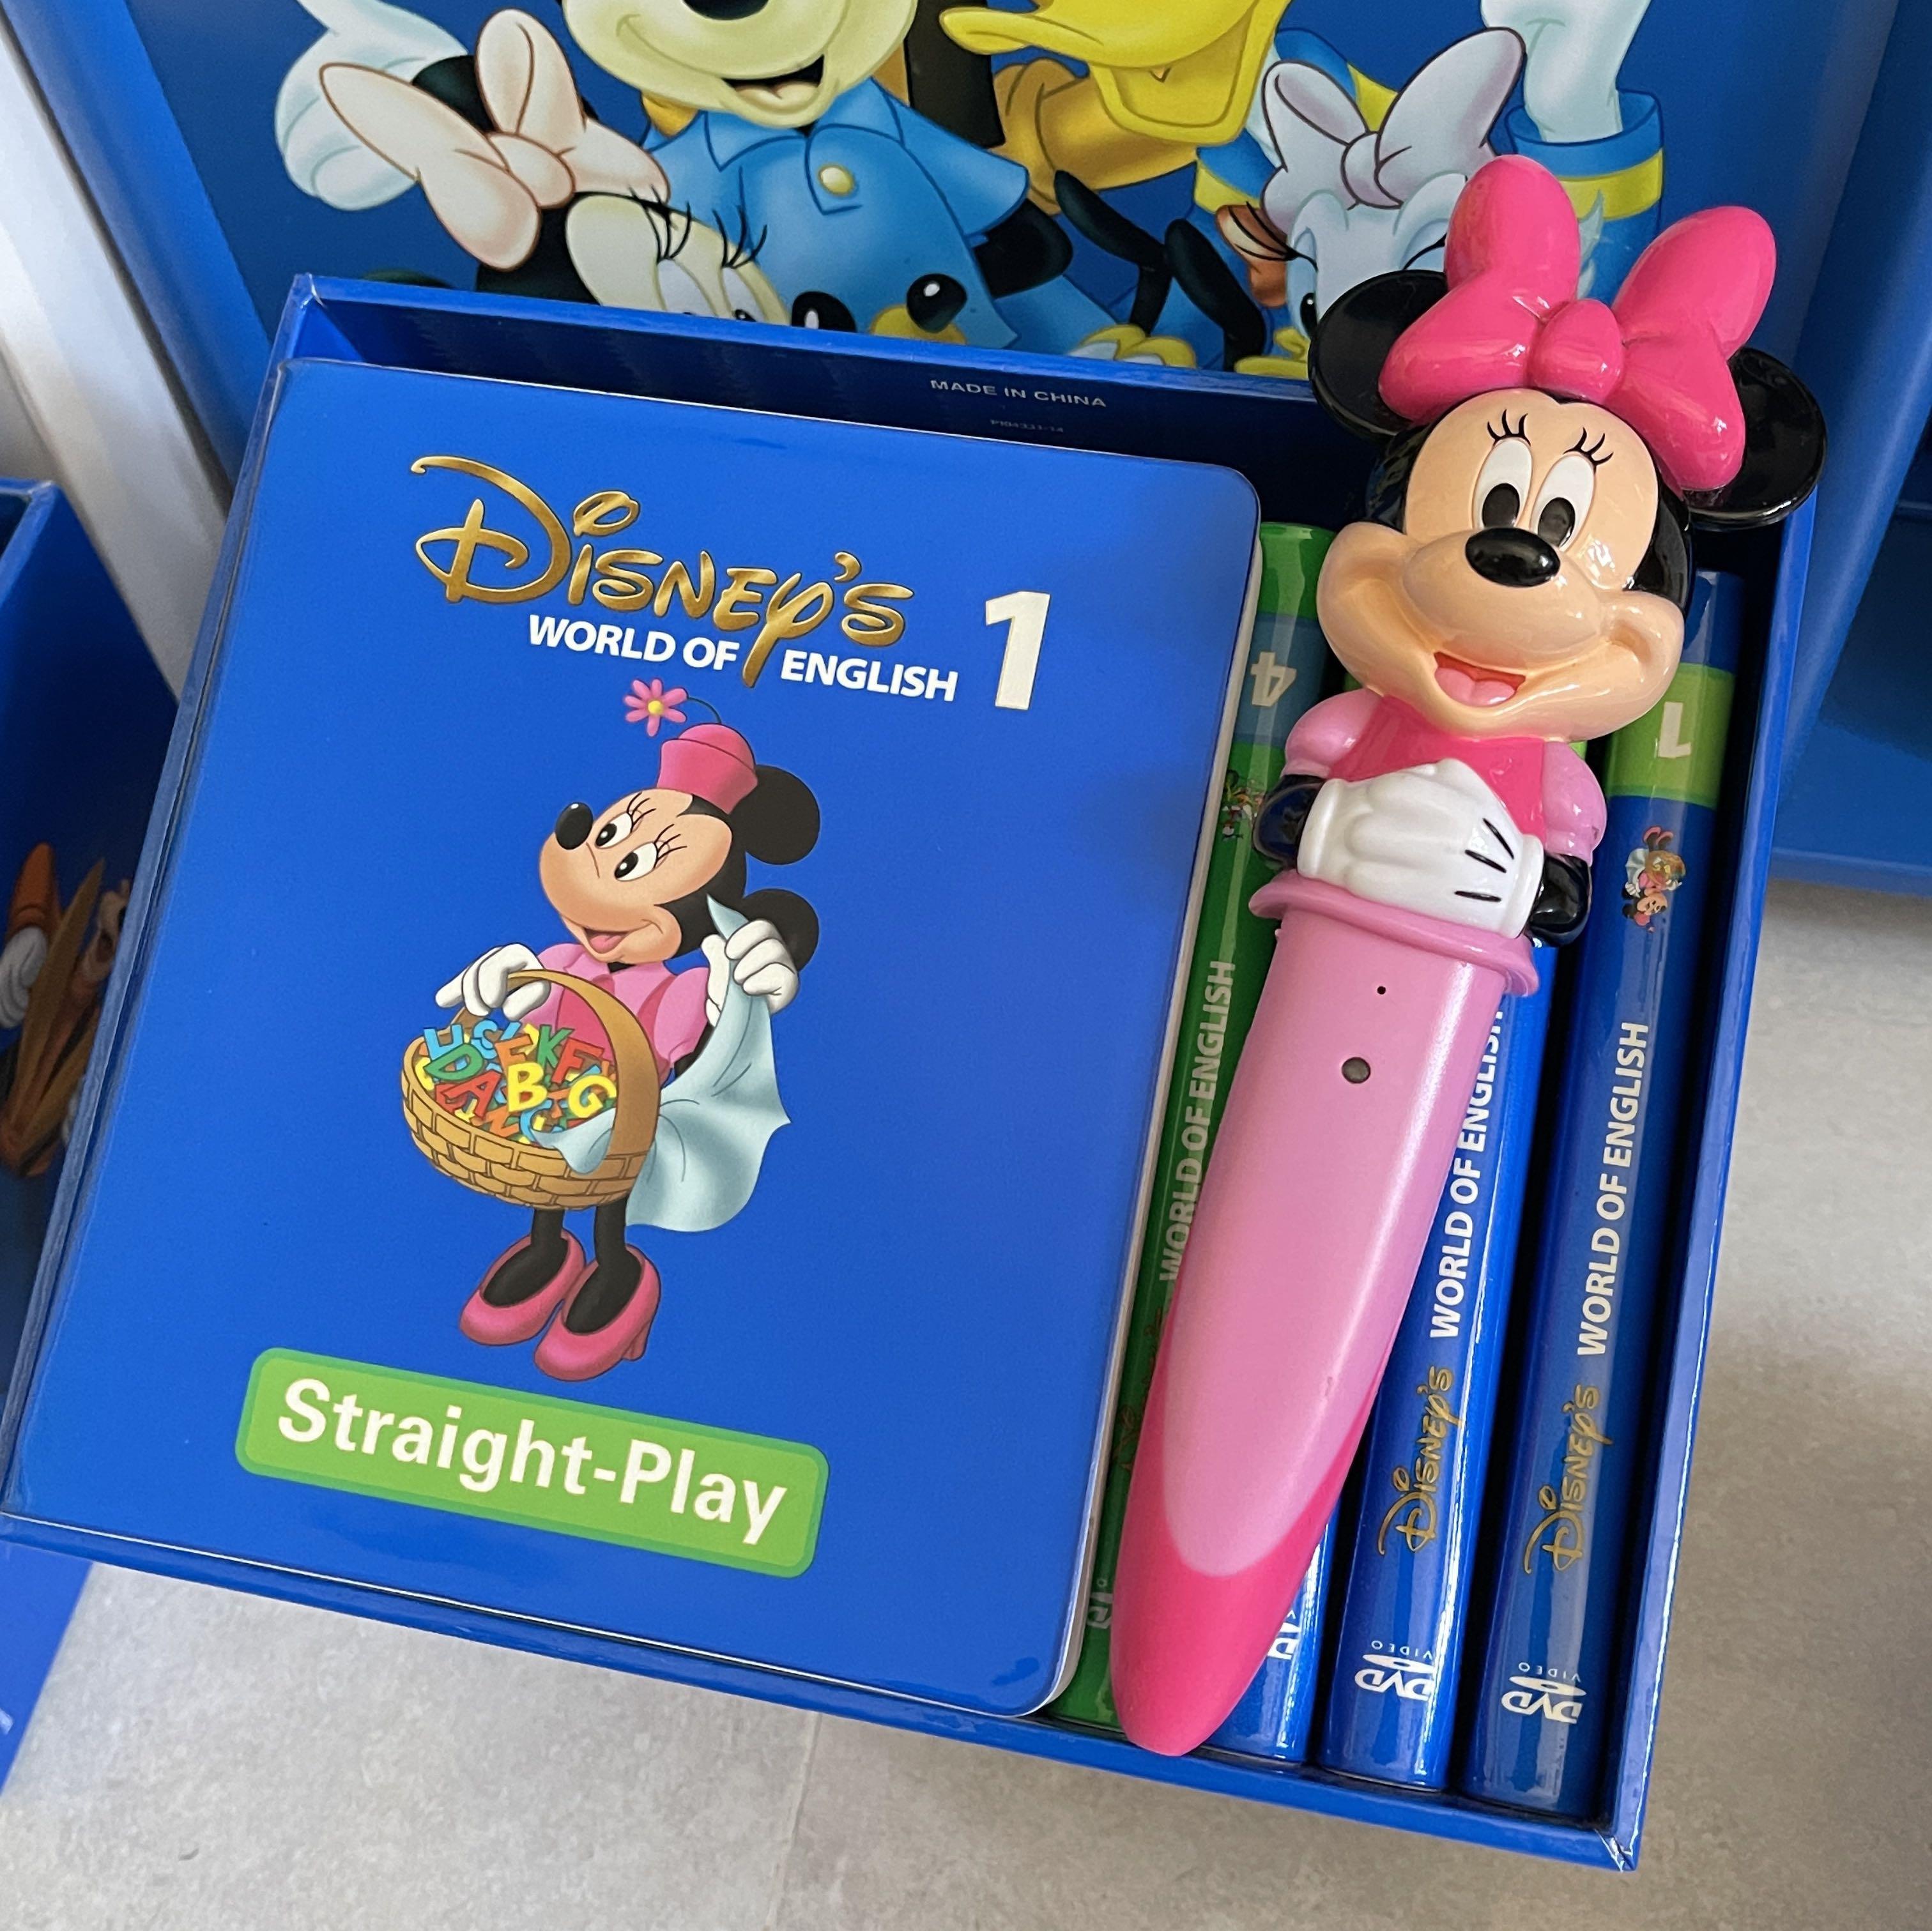 DWE 全套迪士尼美語世界2017 連書櫃Disney World of English（DVD CD